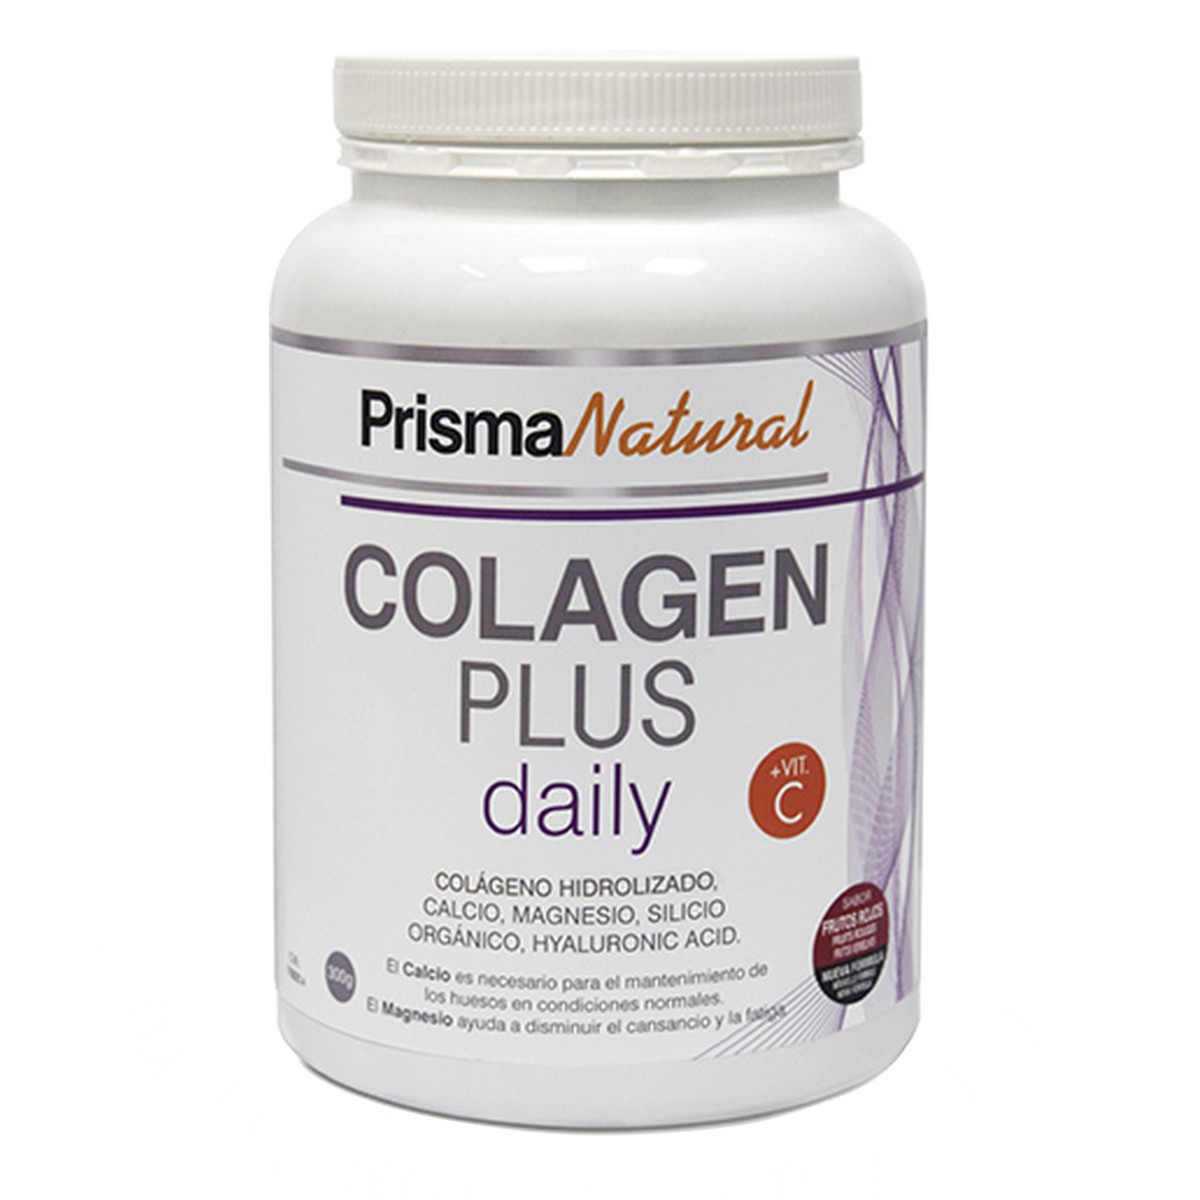 Prisma Natural Colagen plus daily porcino 300g